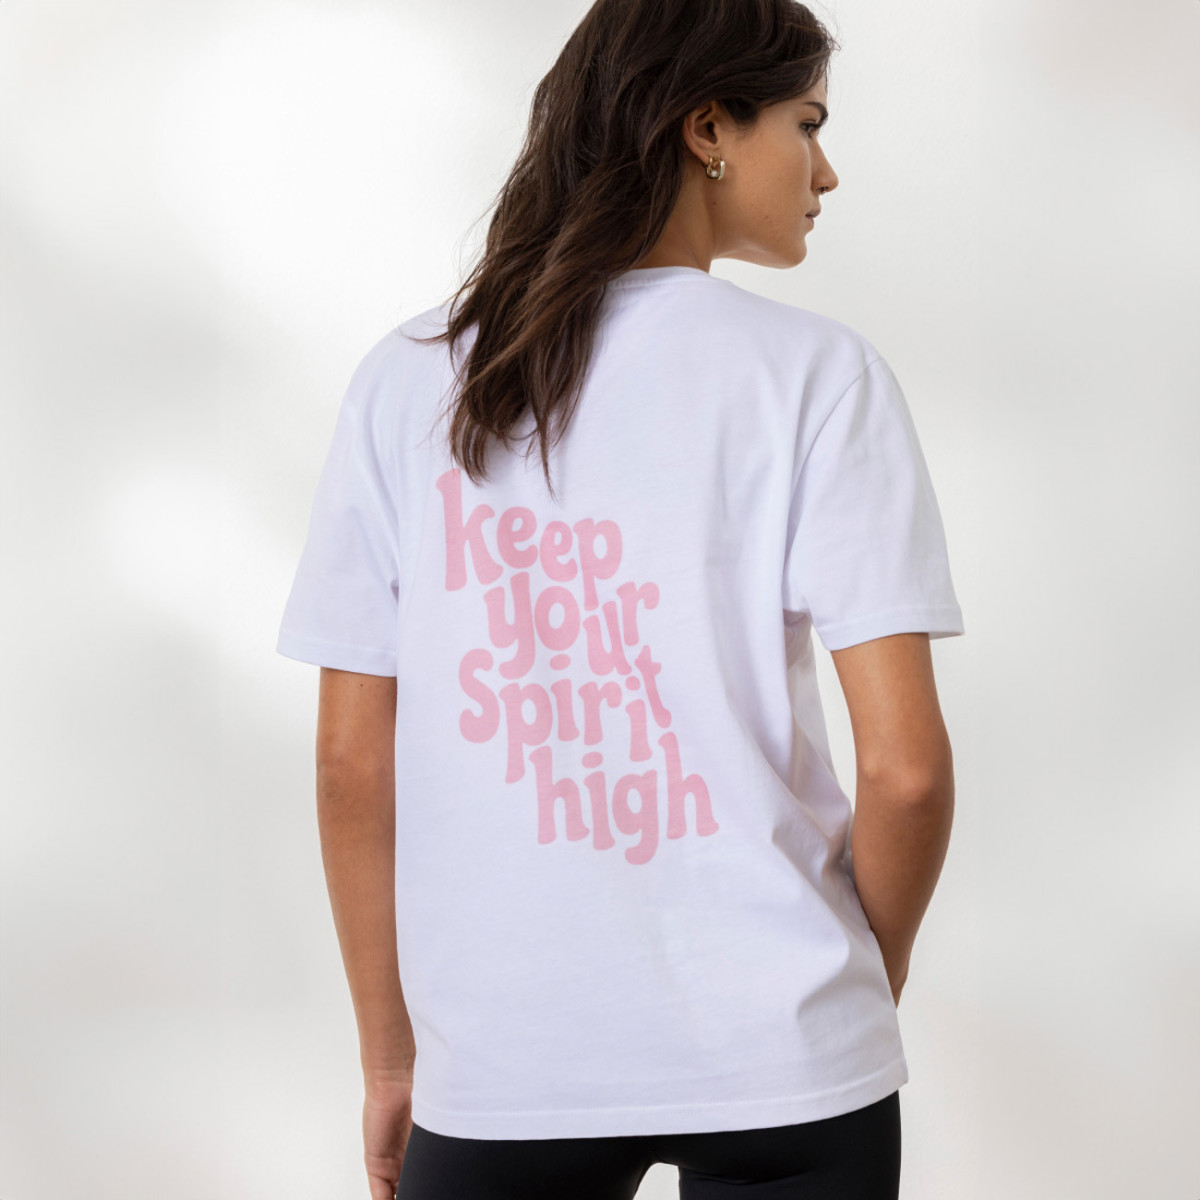 Shirt Spirit - White | T-Shirts | Tops | Women's Clothing | YOGA ...